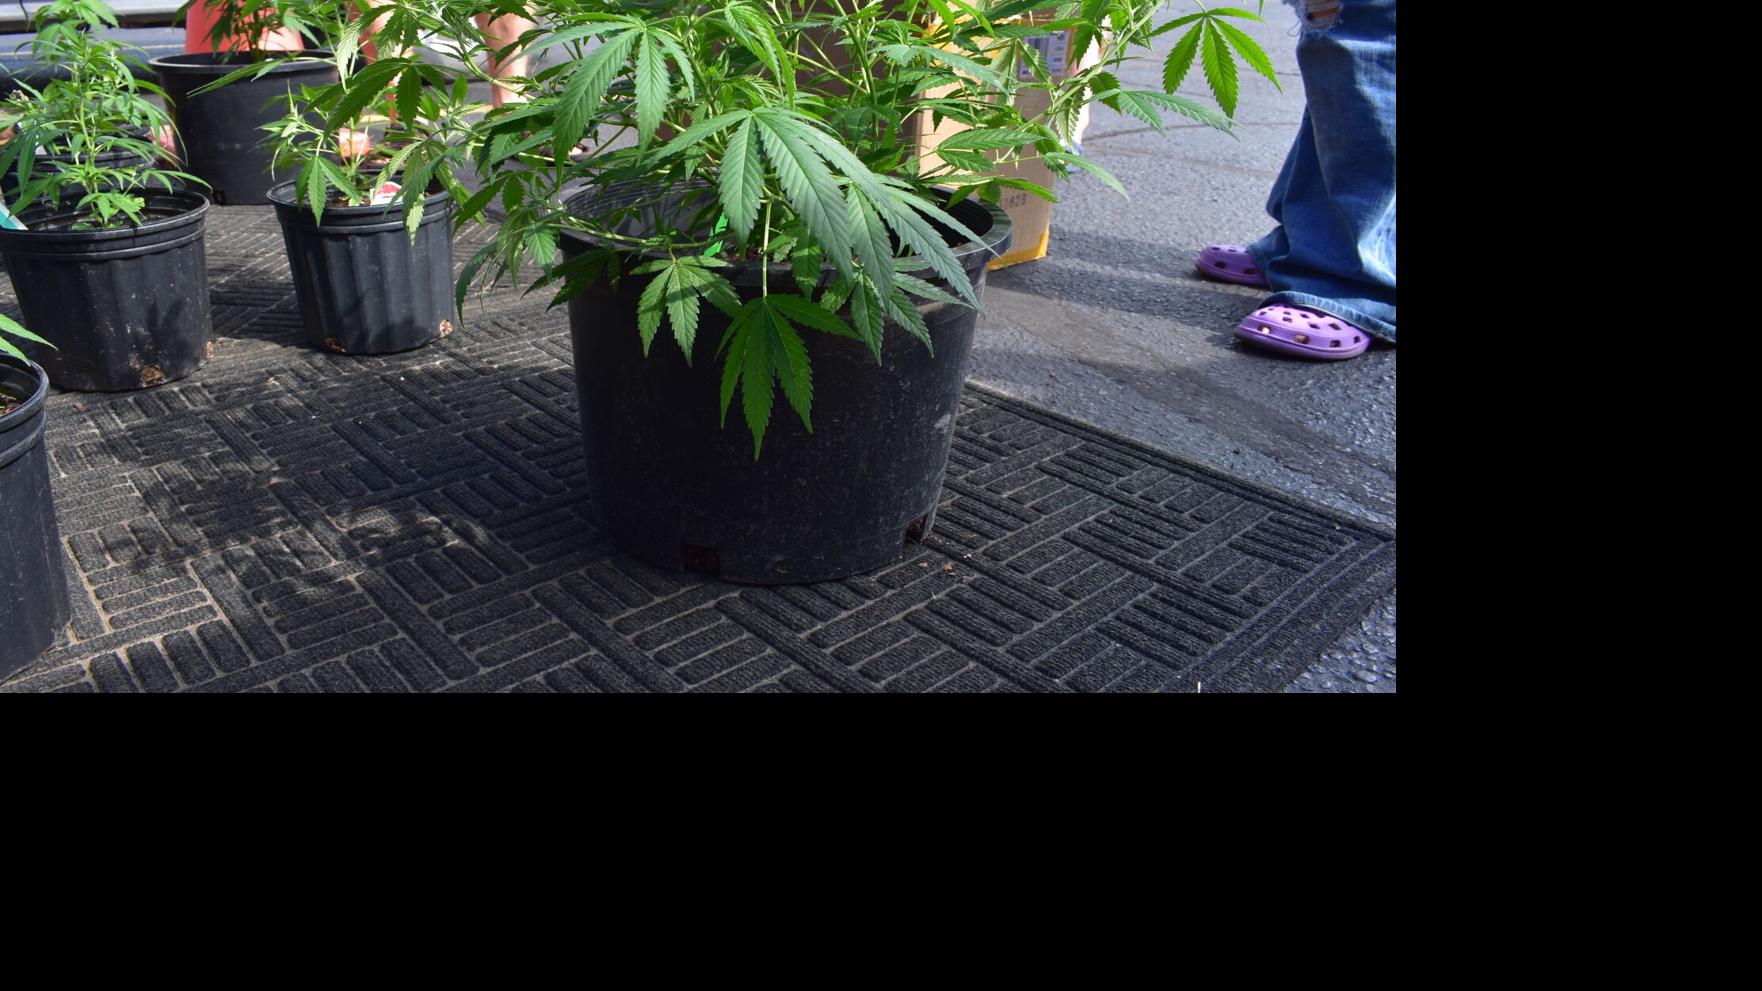 Regulators destroy $278,000 worth of raw cannabis flower